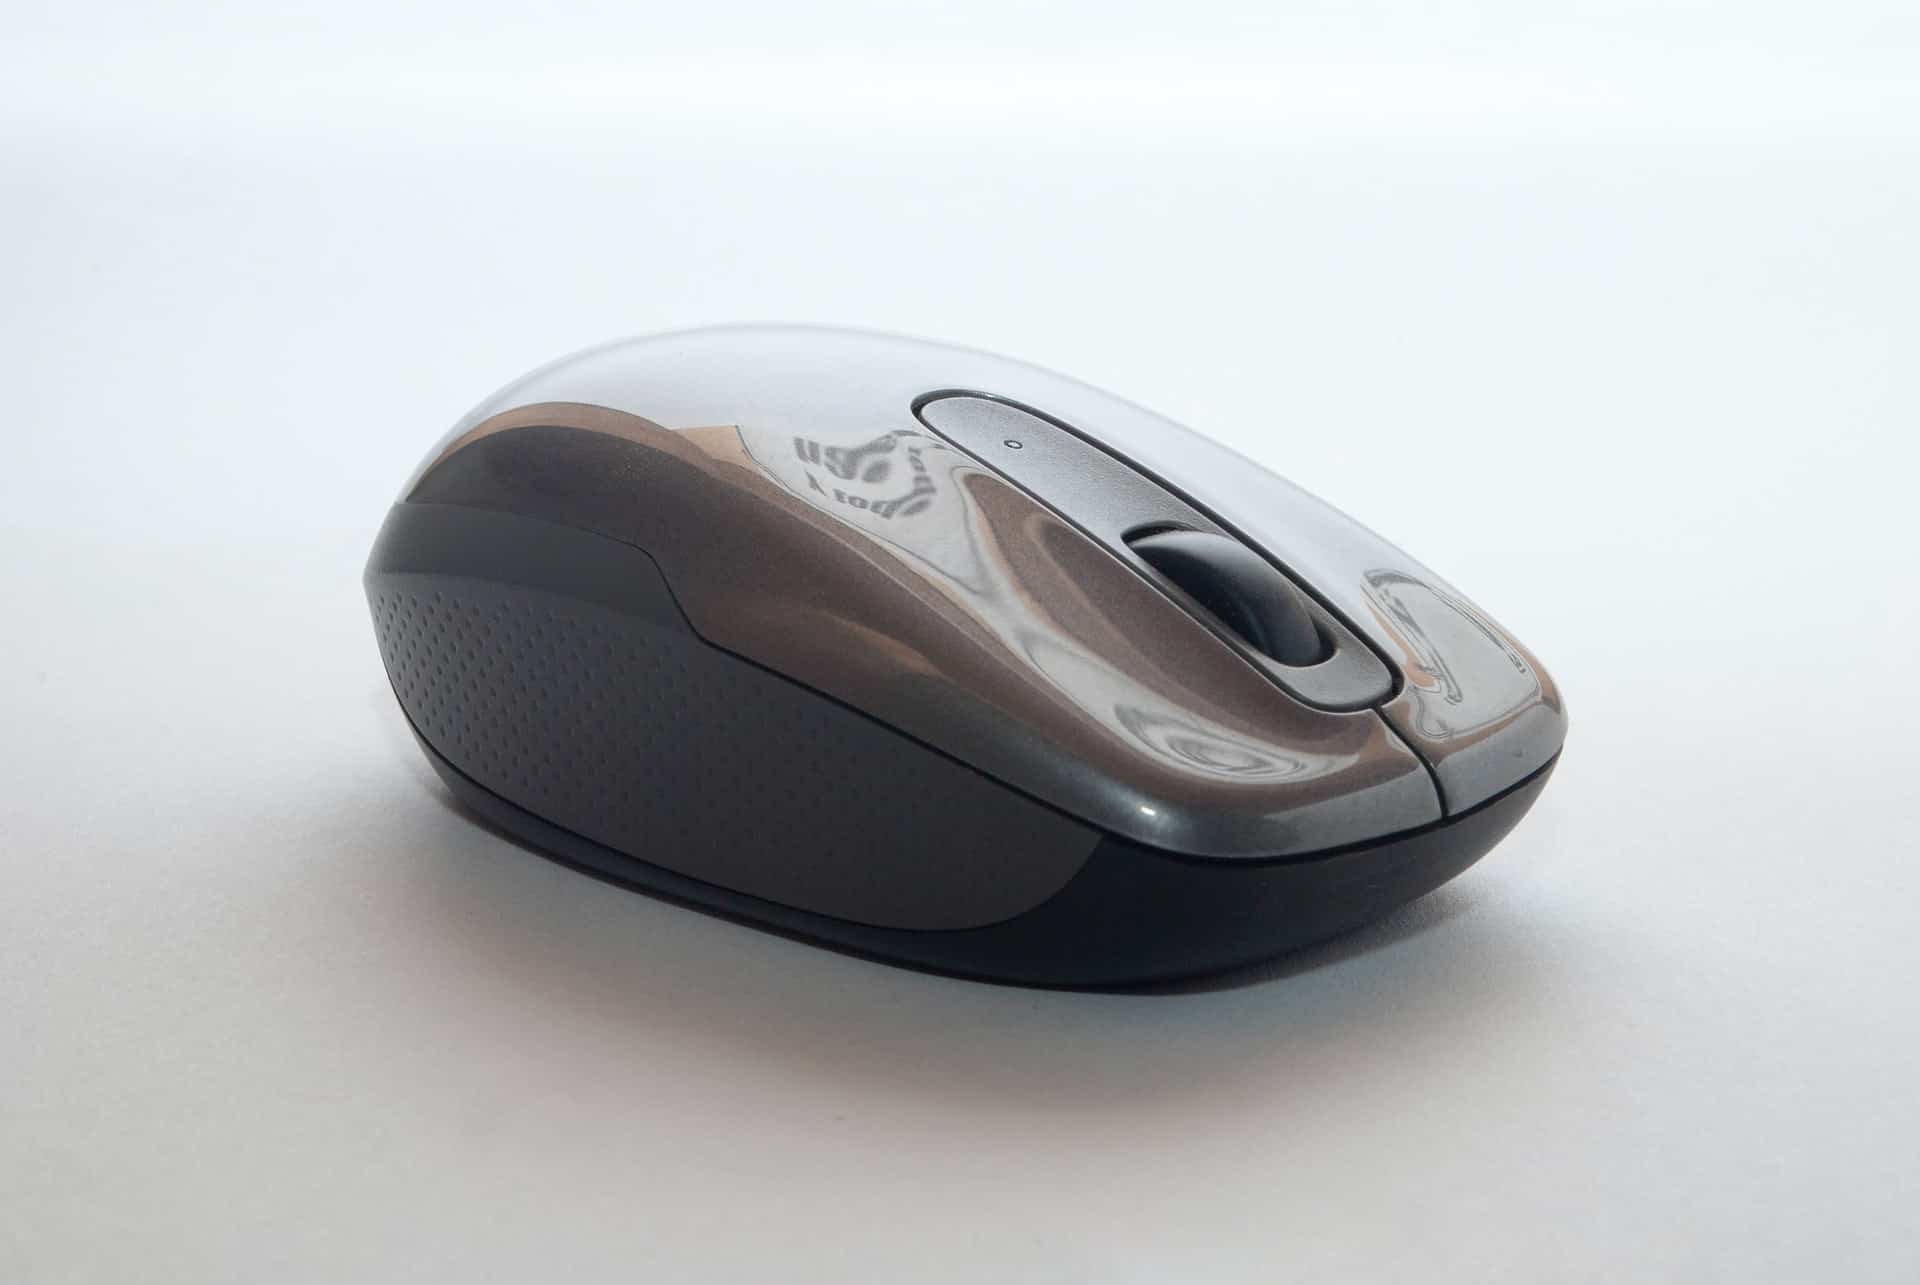 Gray PC mouse